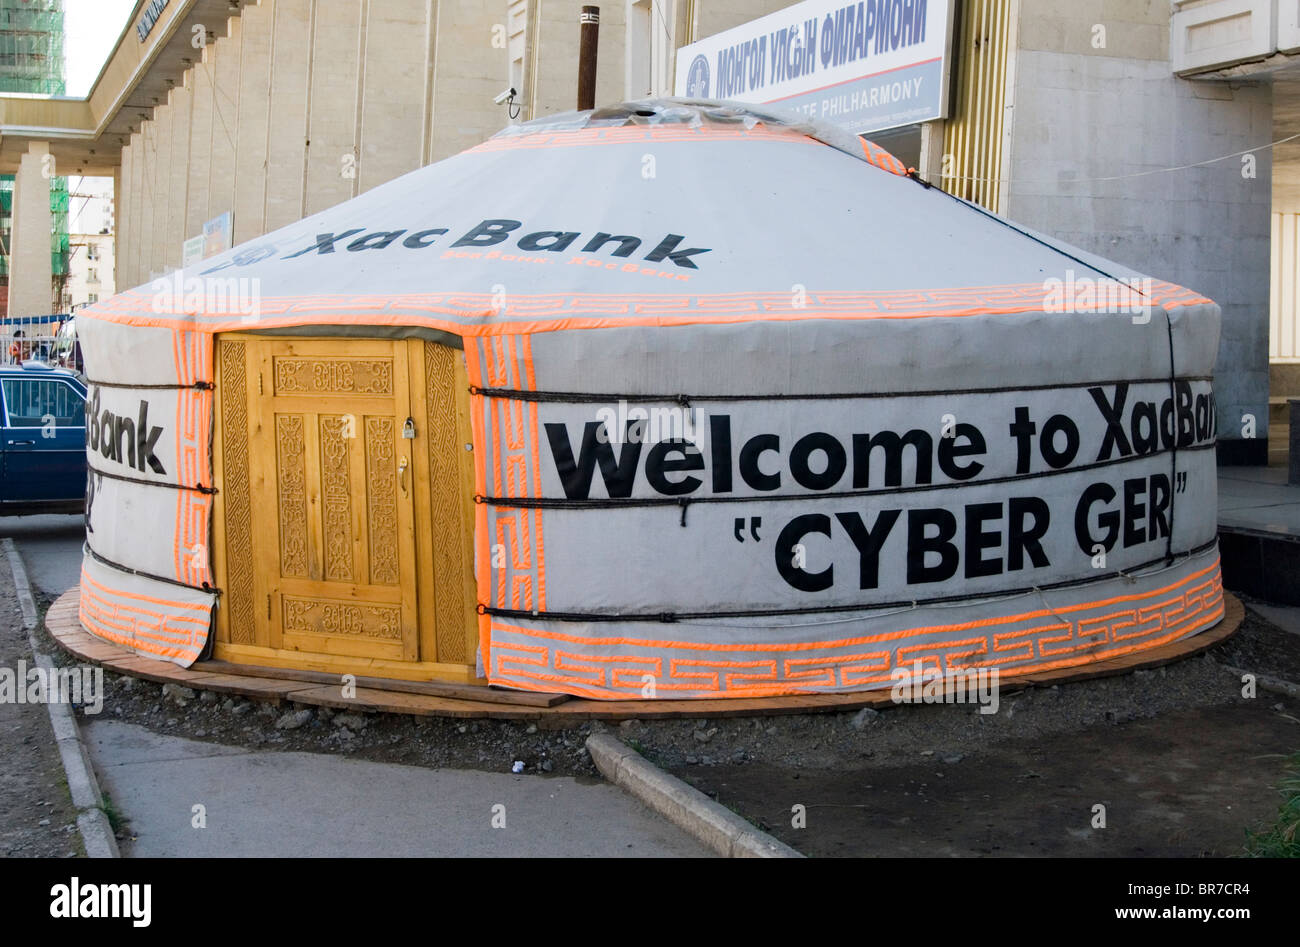 Cyber ger Ulaanbaatar Mongolie Banque D'Images